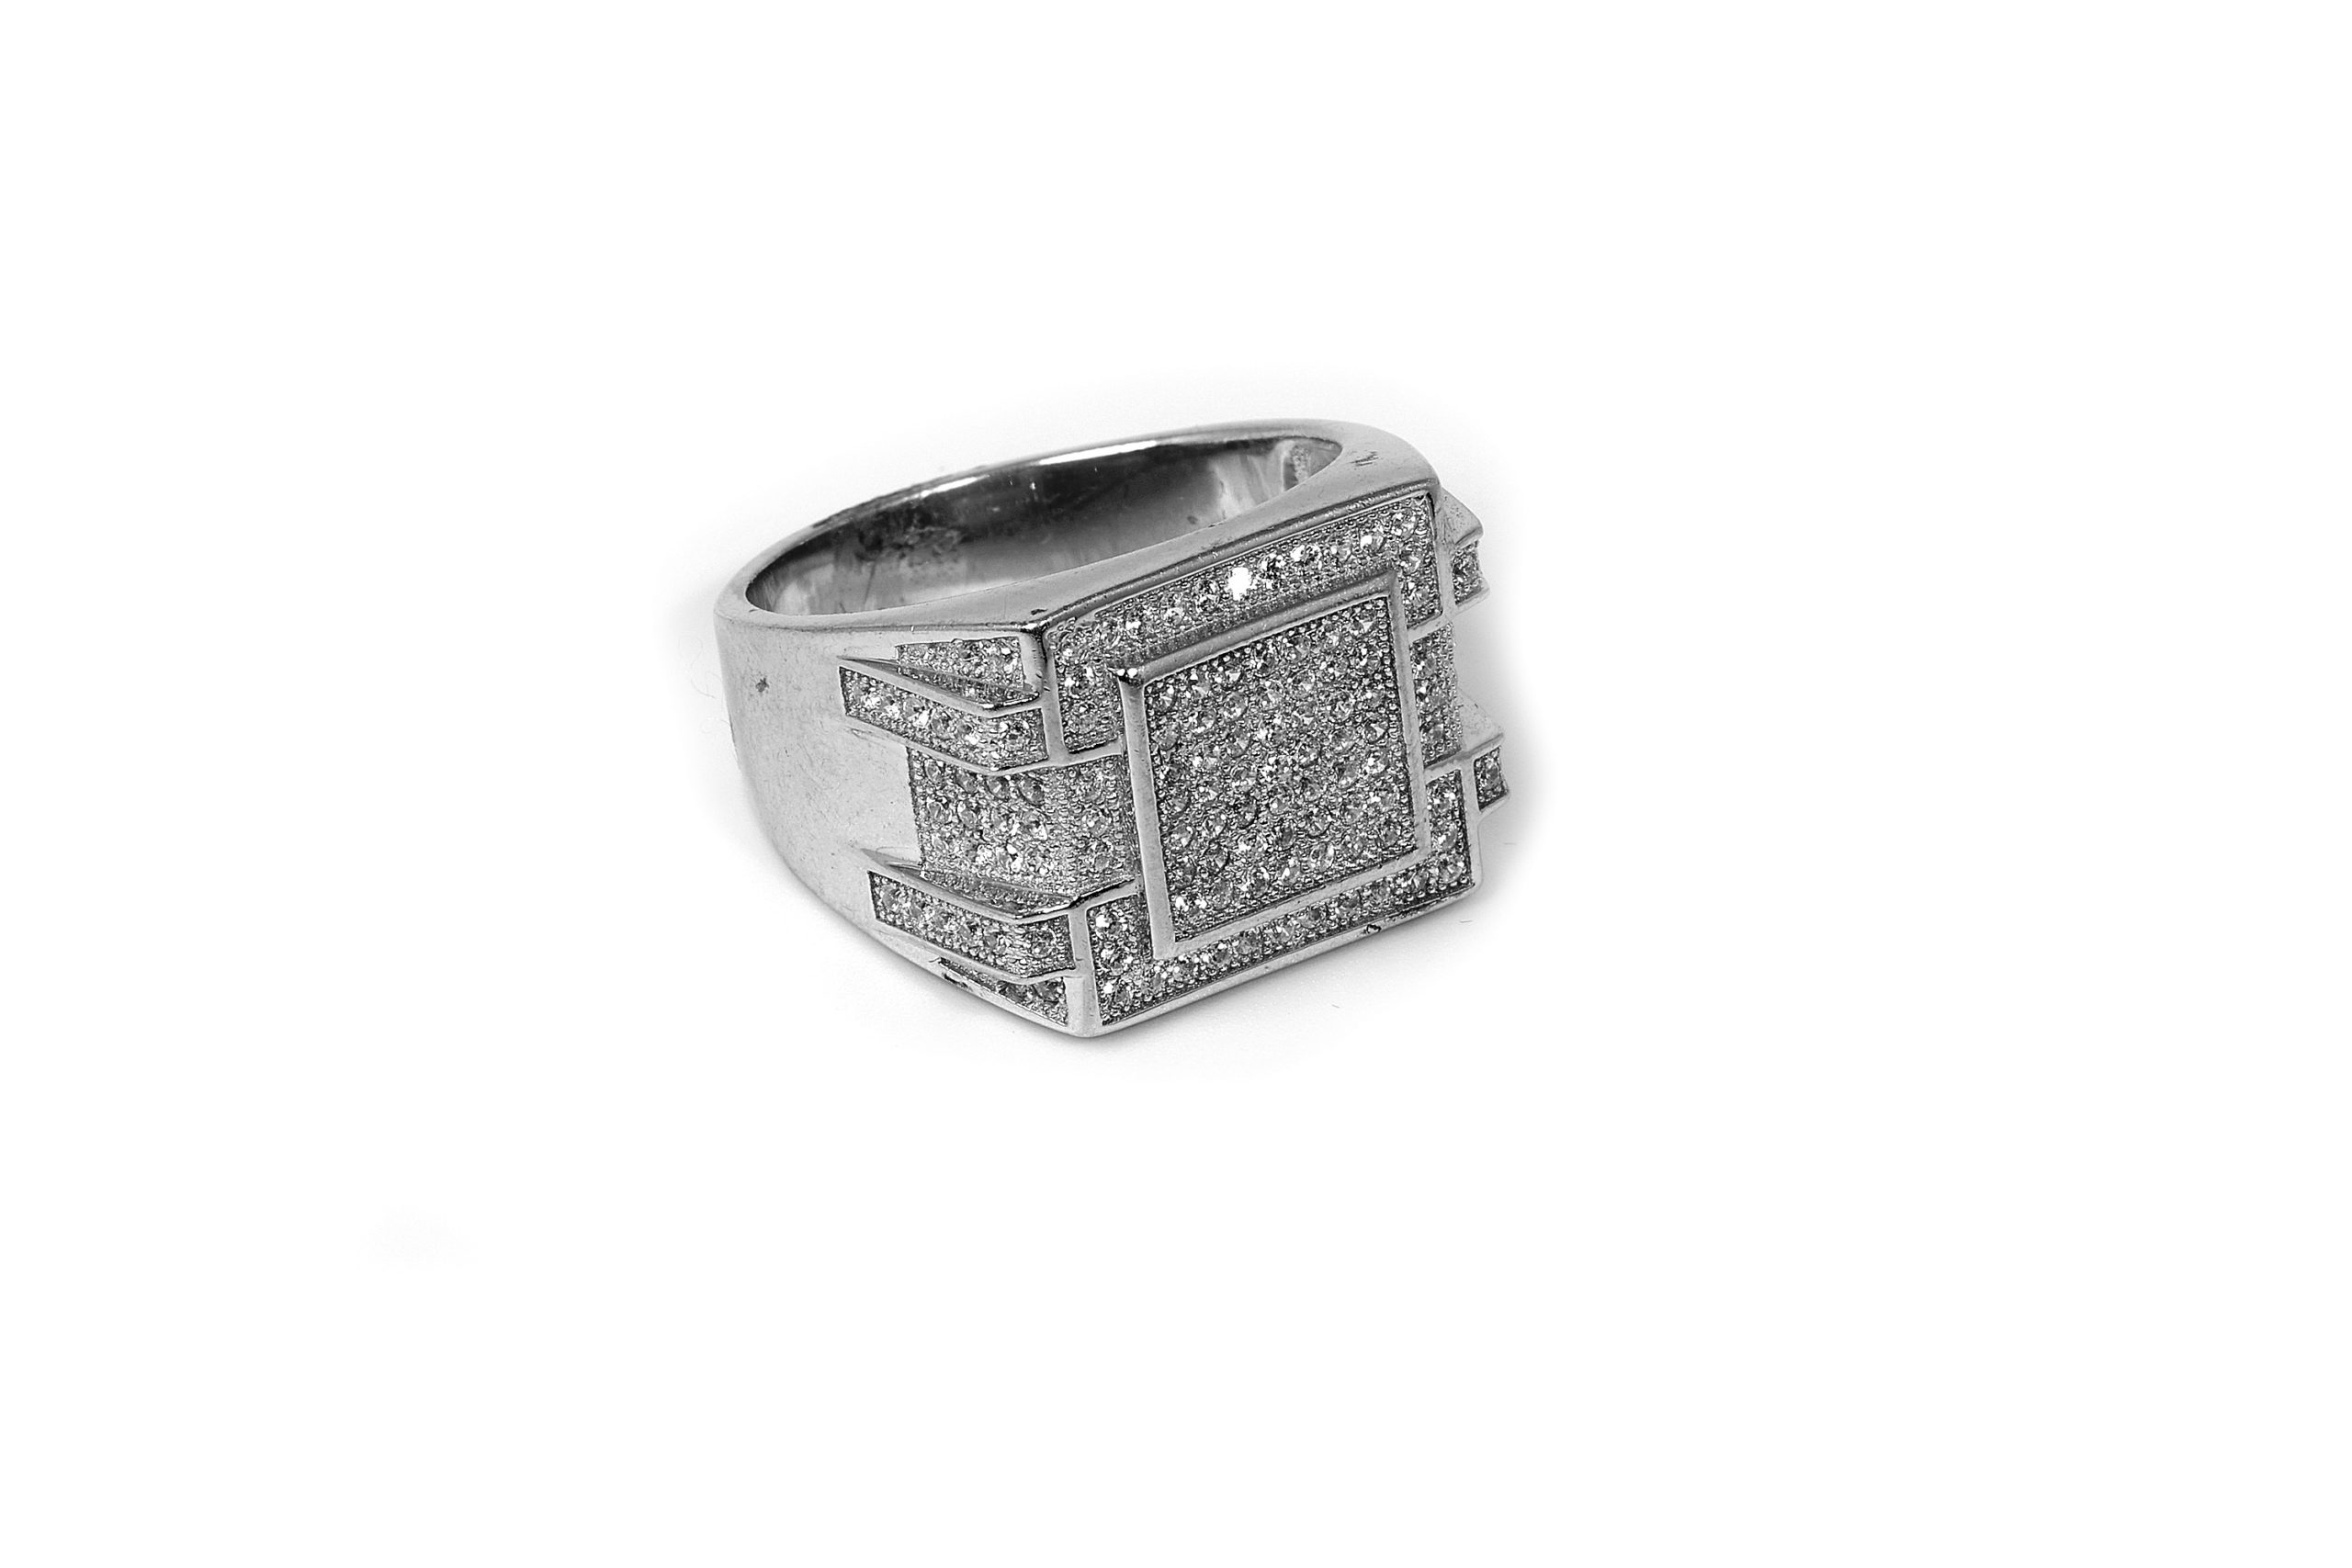 Silver Rings Men, Adjustable Rings, Mens Rings, Mens Jewelry, Rings for Men,  Gift for Him, Made in Greece. - Etsy